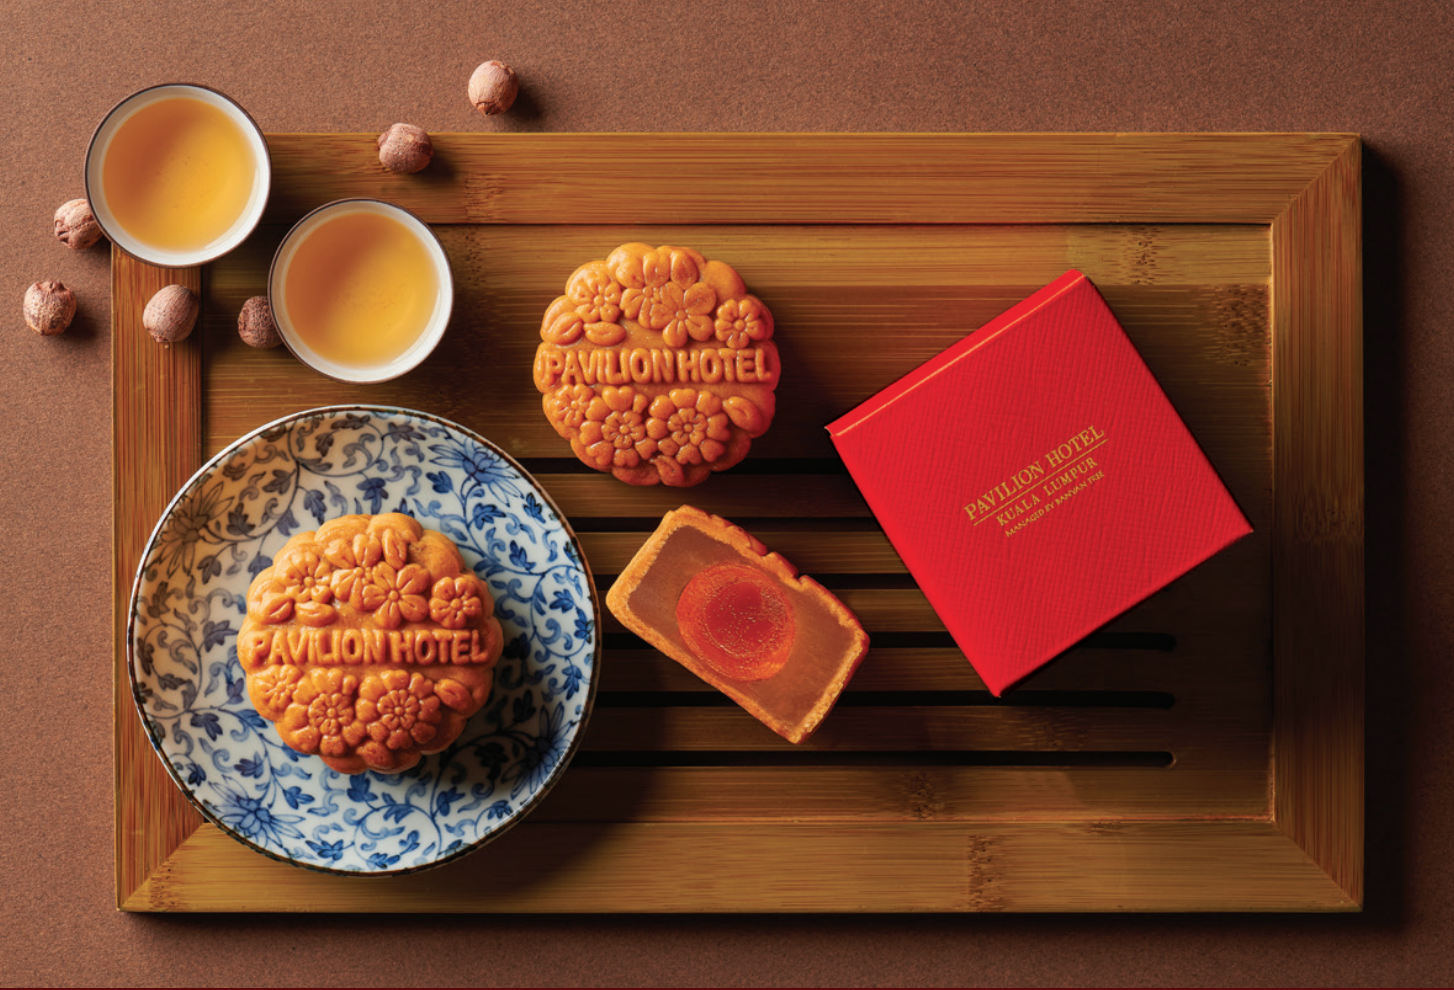 吉隆坡 PAVILION HOTEL 推出月饼礼盒